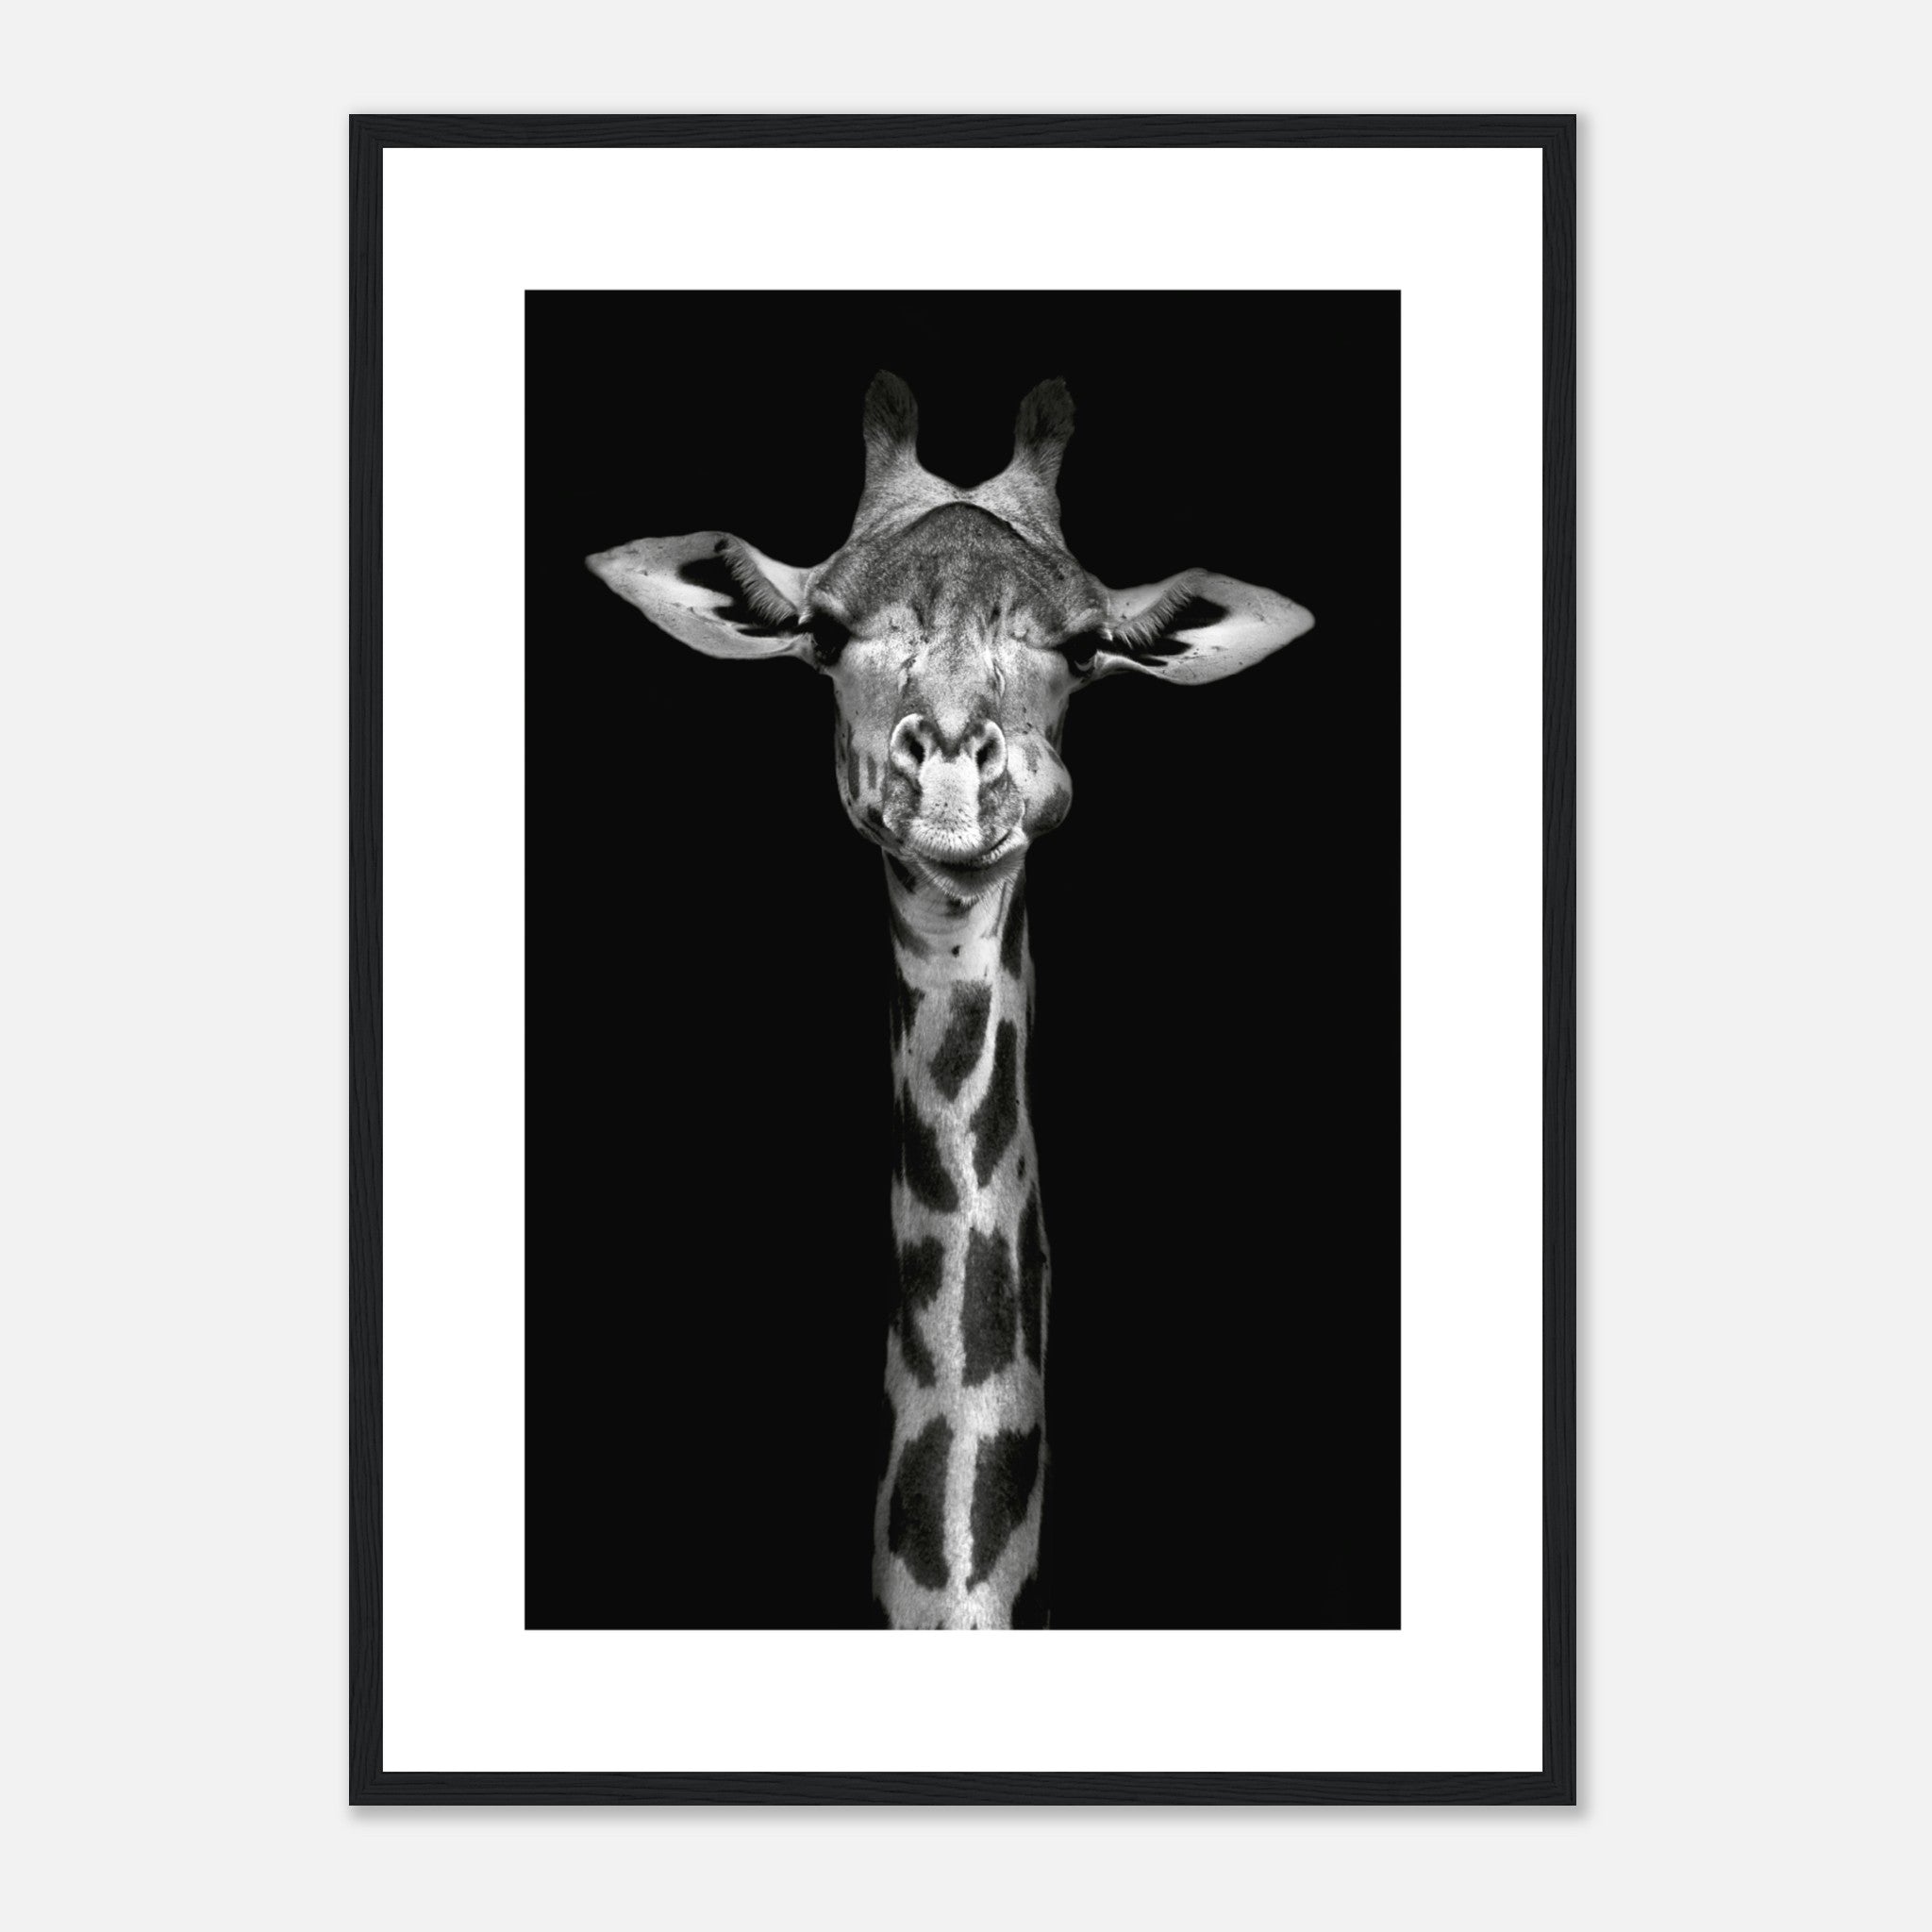 The Giraffe No.2 Poster